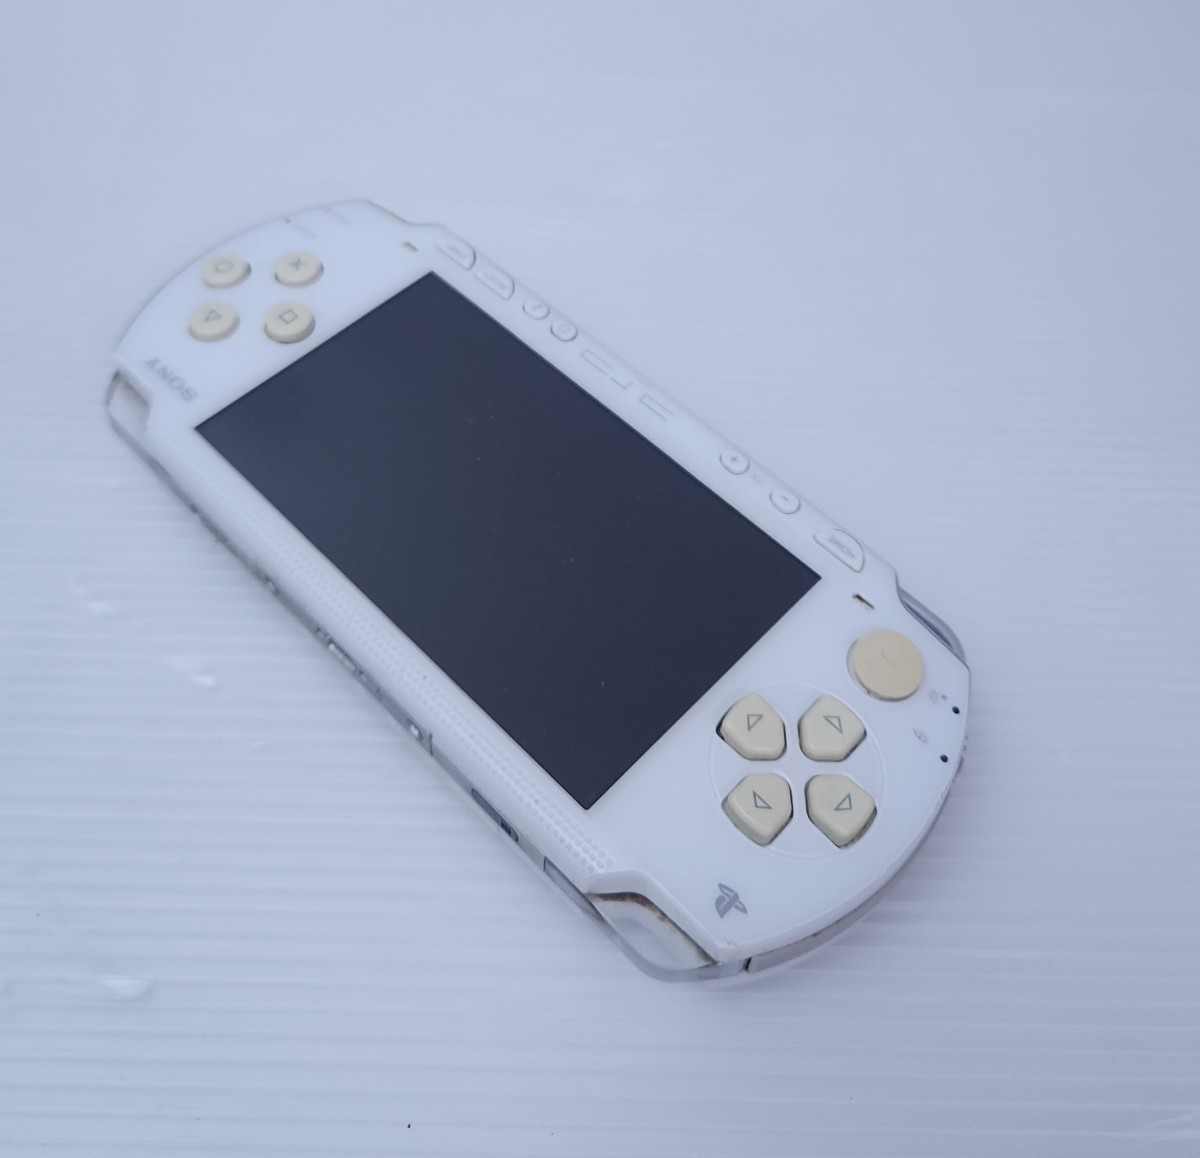  operation goods Sony SONY PSP-1000 white Sony PSP-1000 white body used rare goods (2)